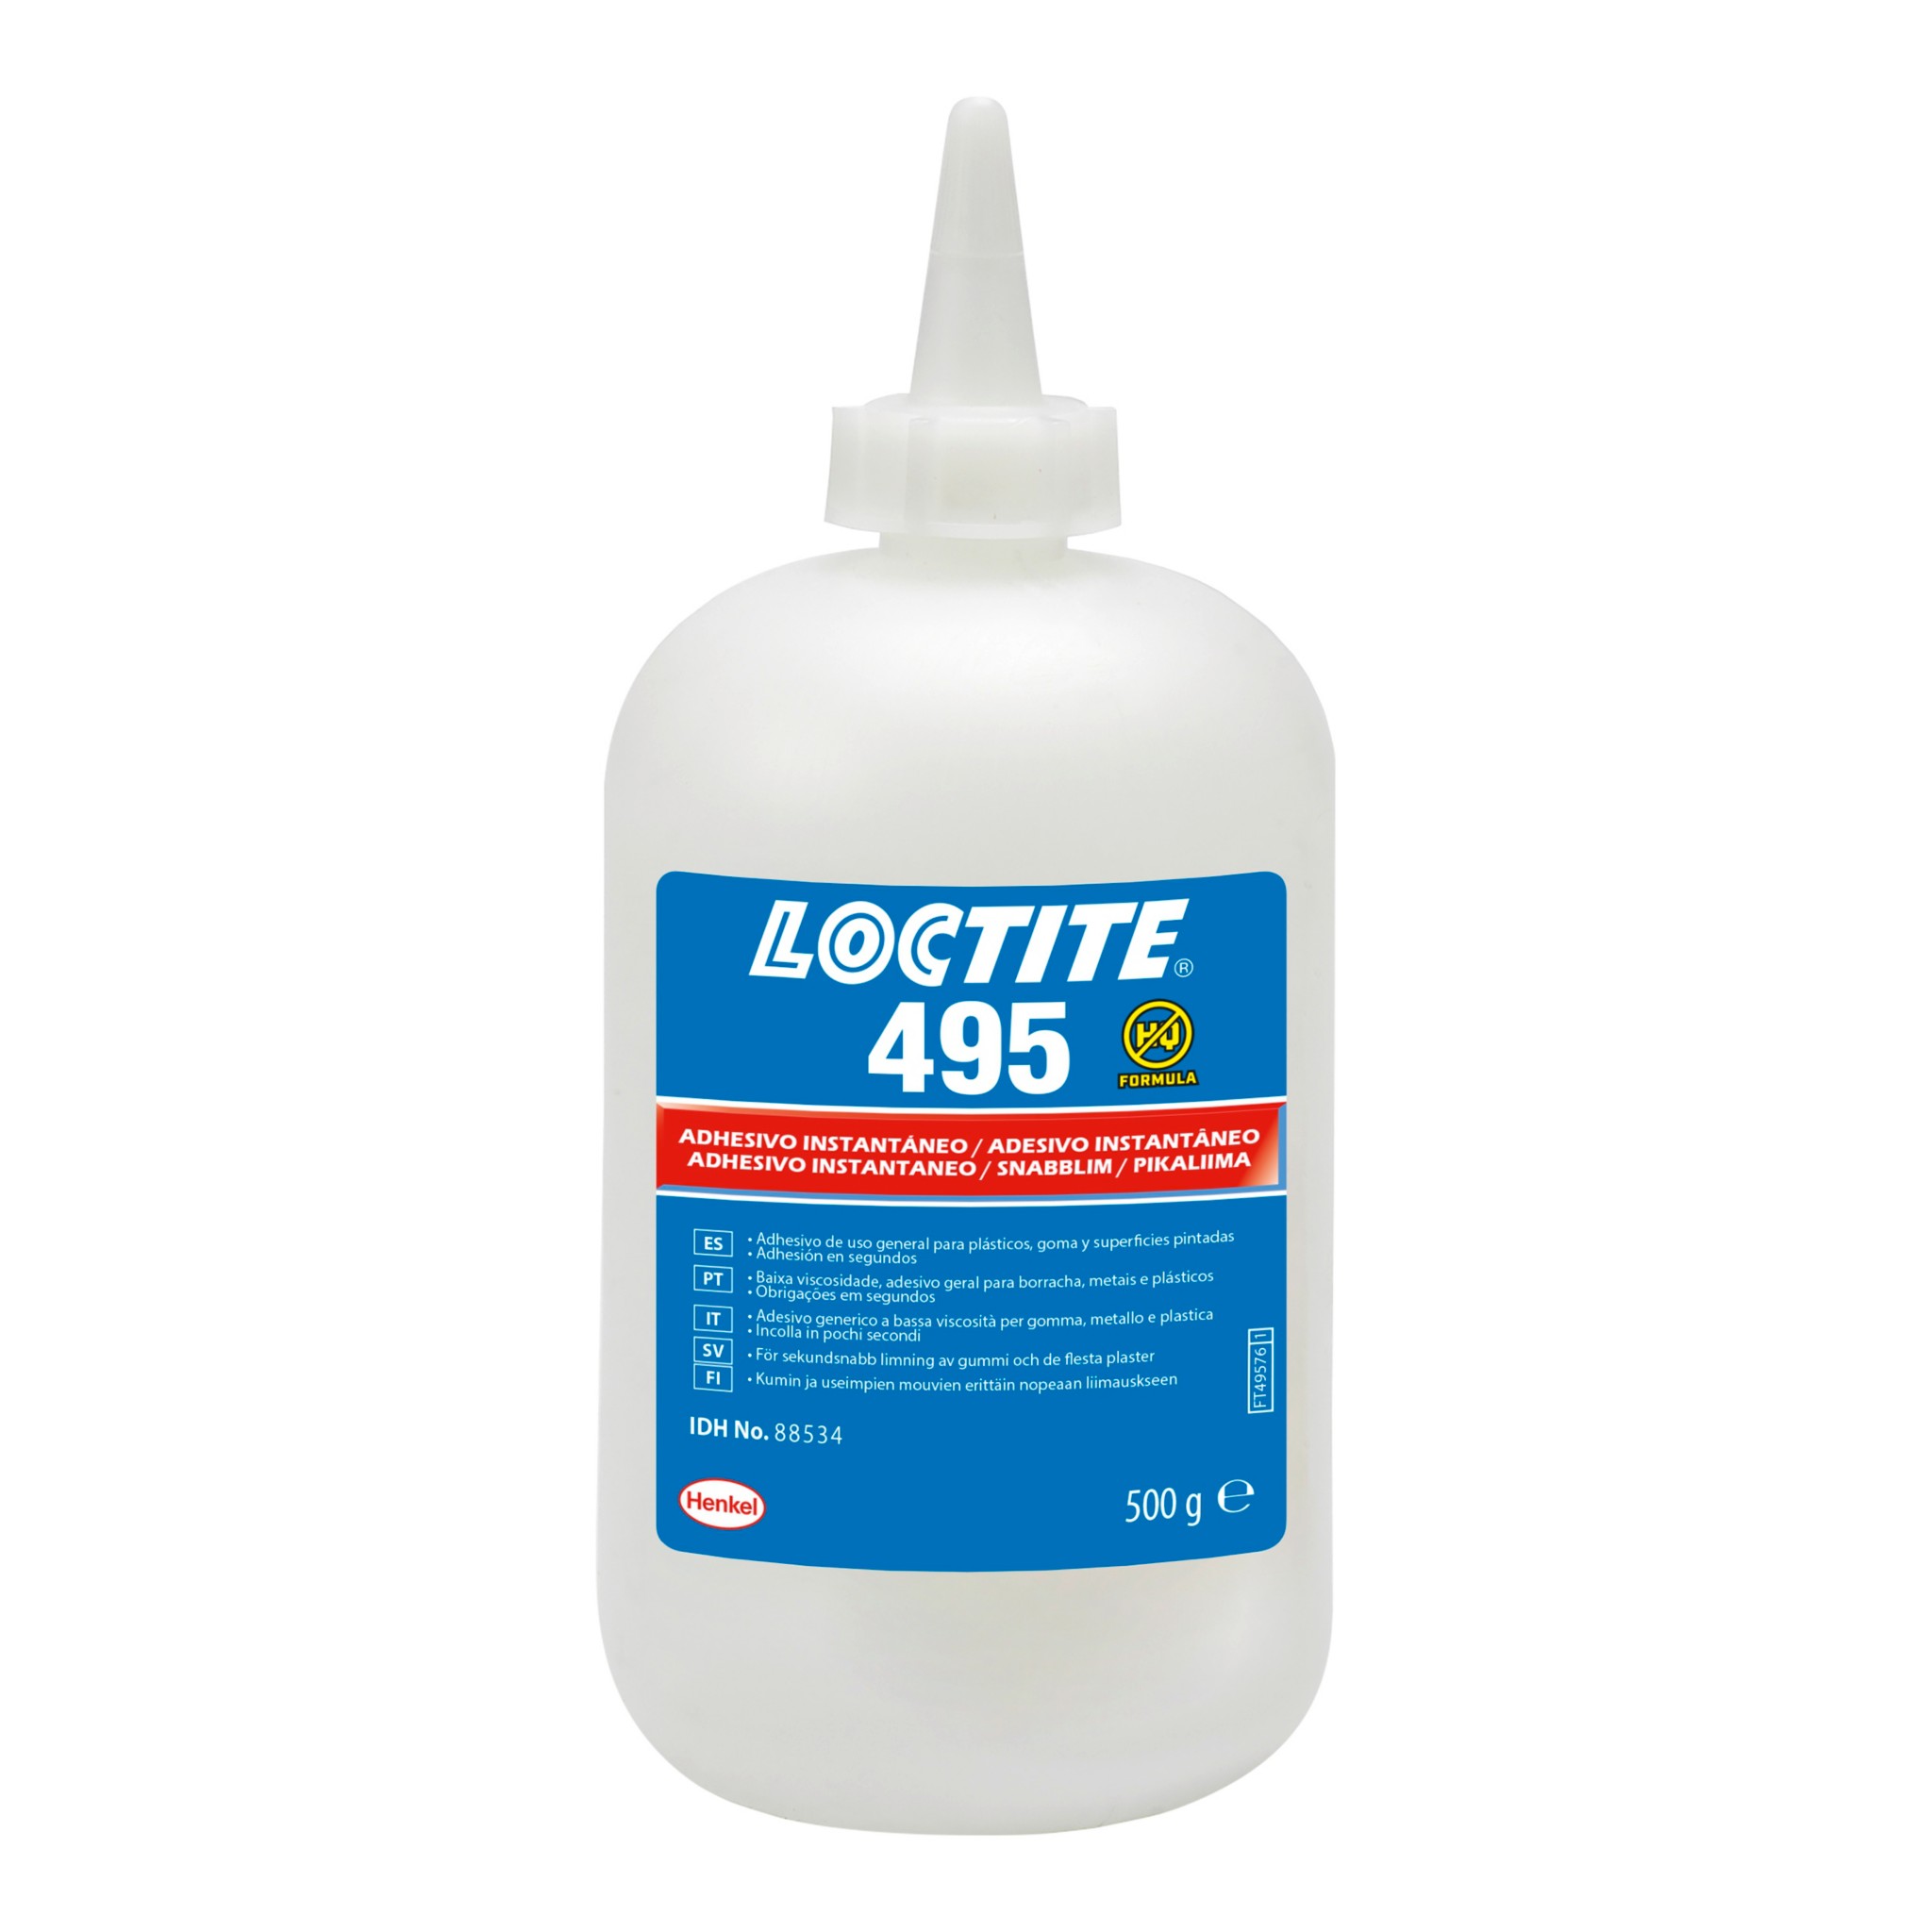 Locktite 495, Plastic Adhesive Glue